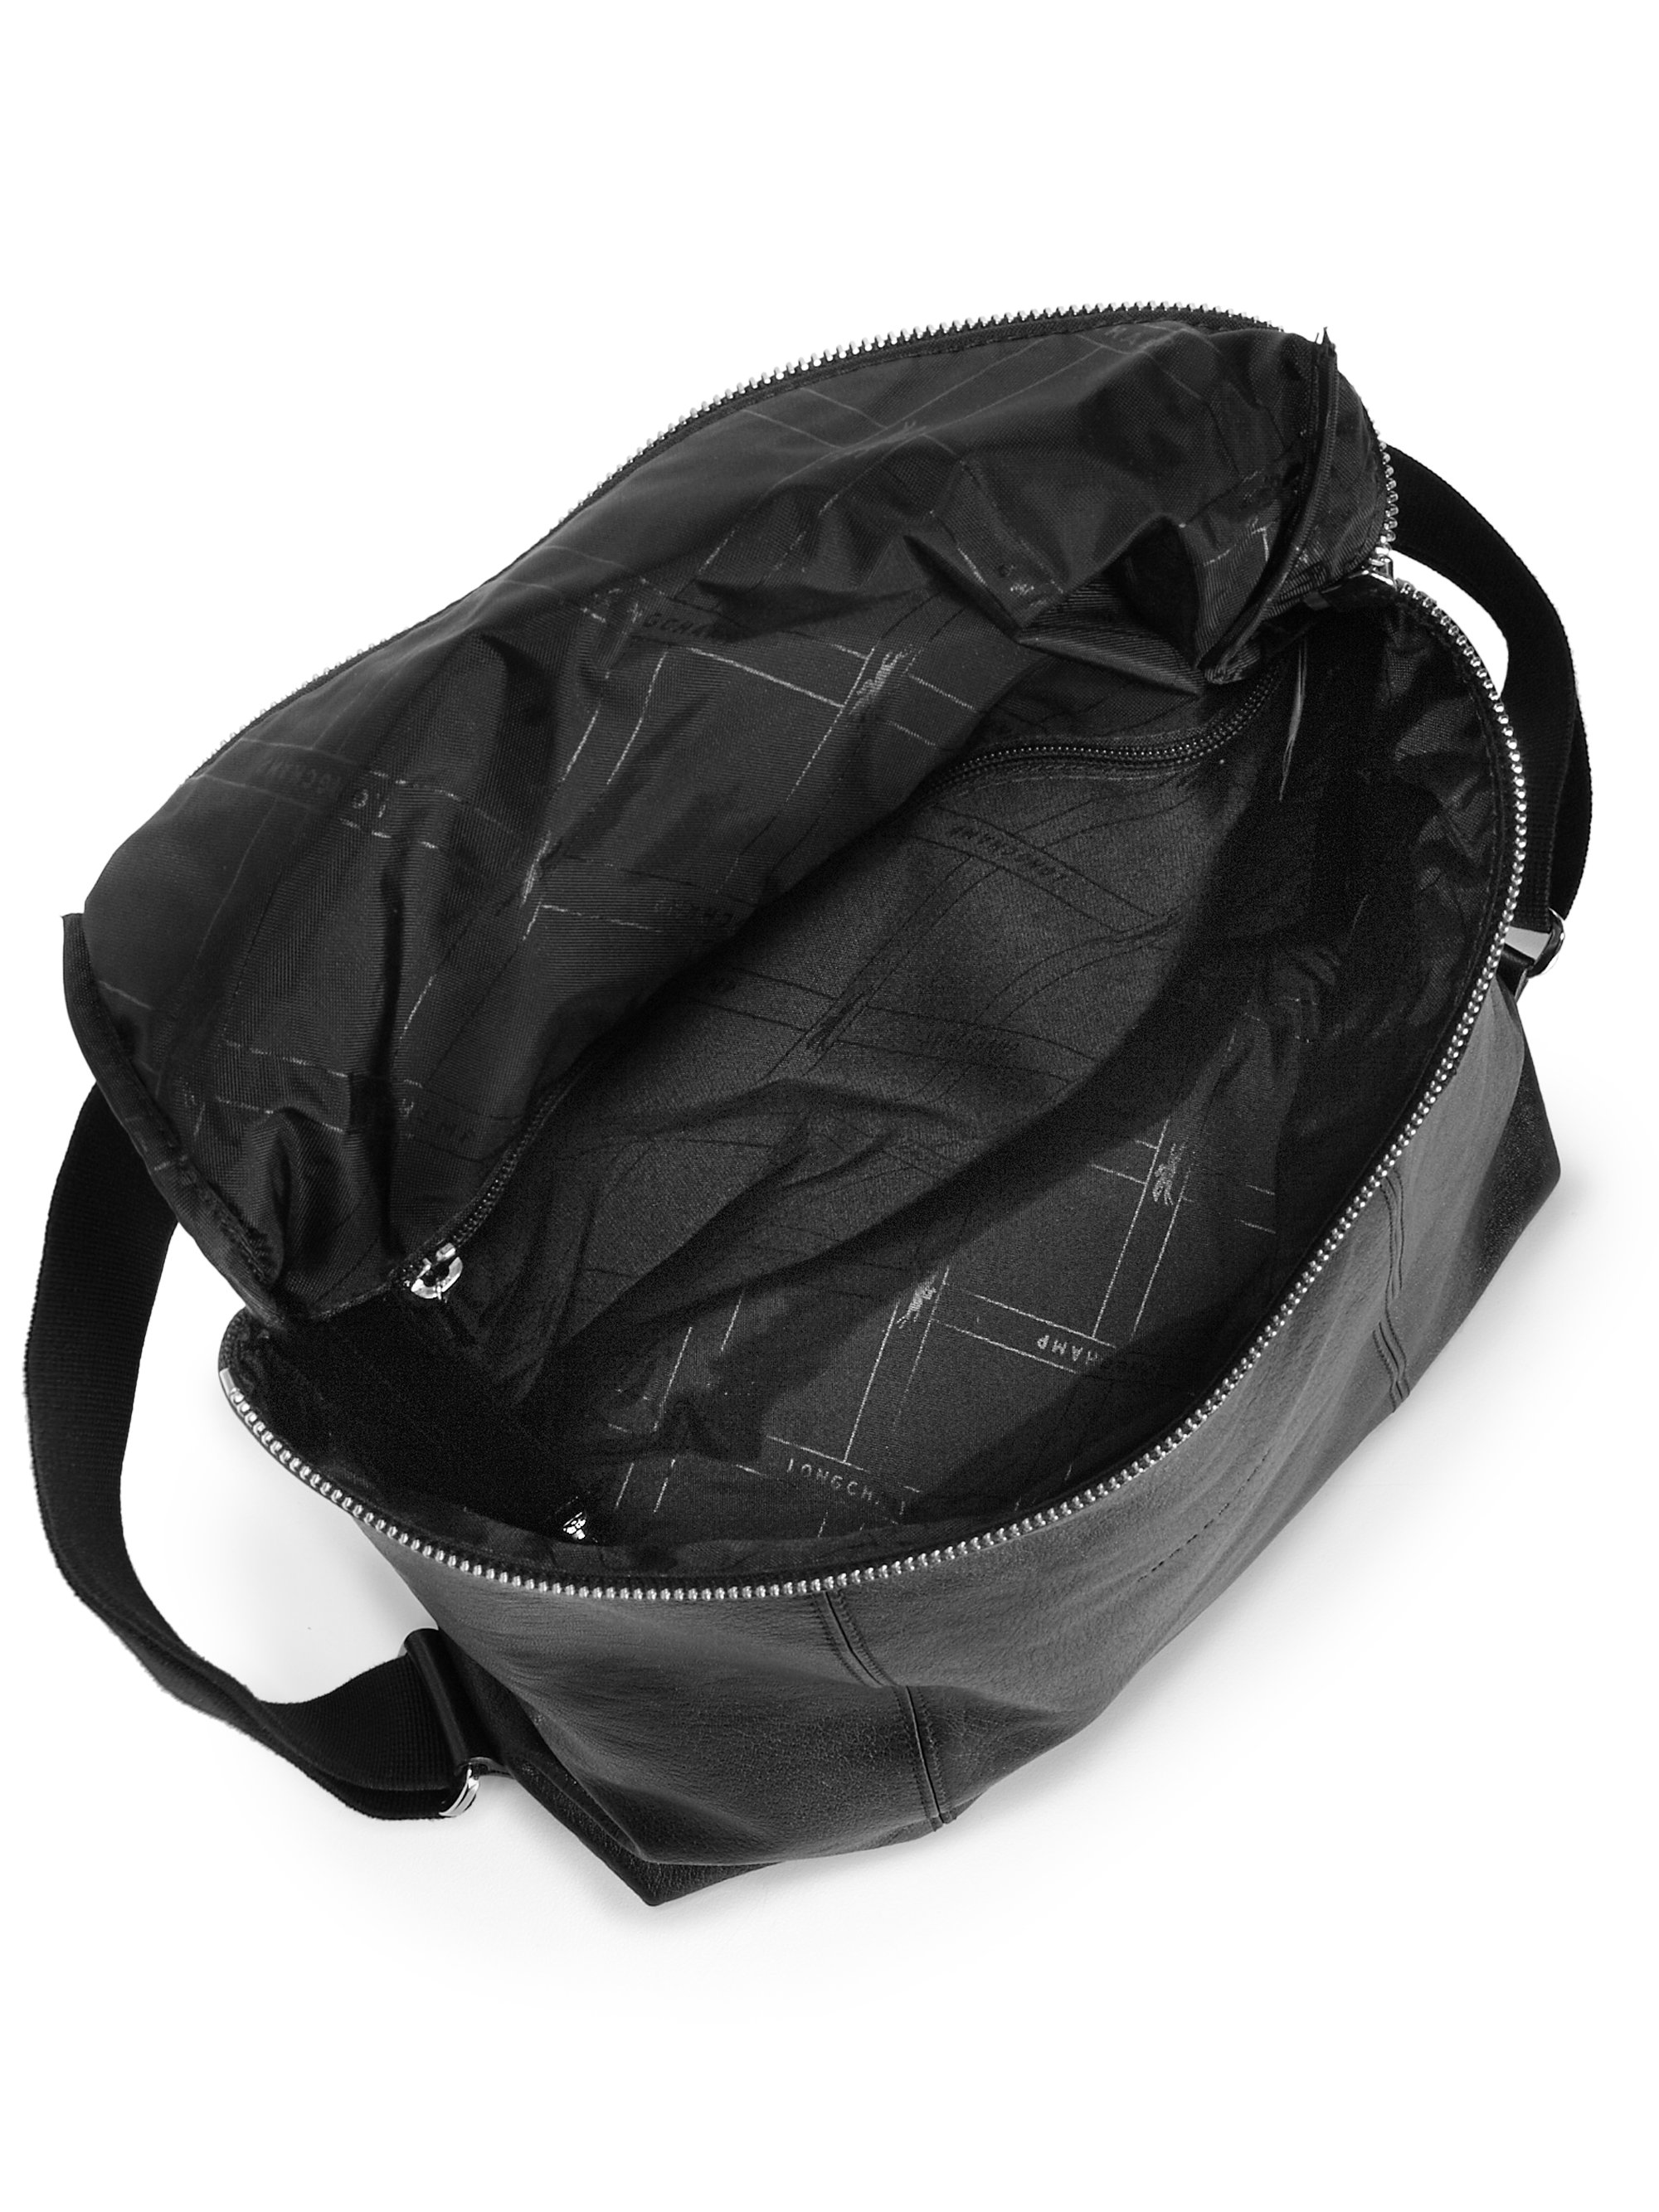 Lyst - Longchamp Parisis Leather Backpack in Black for Men